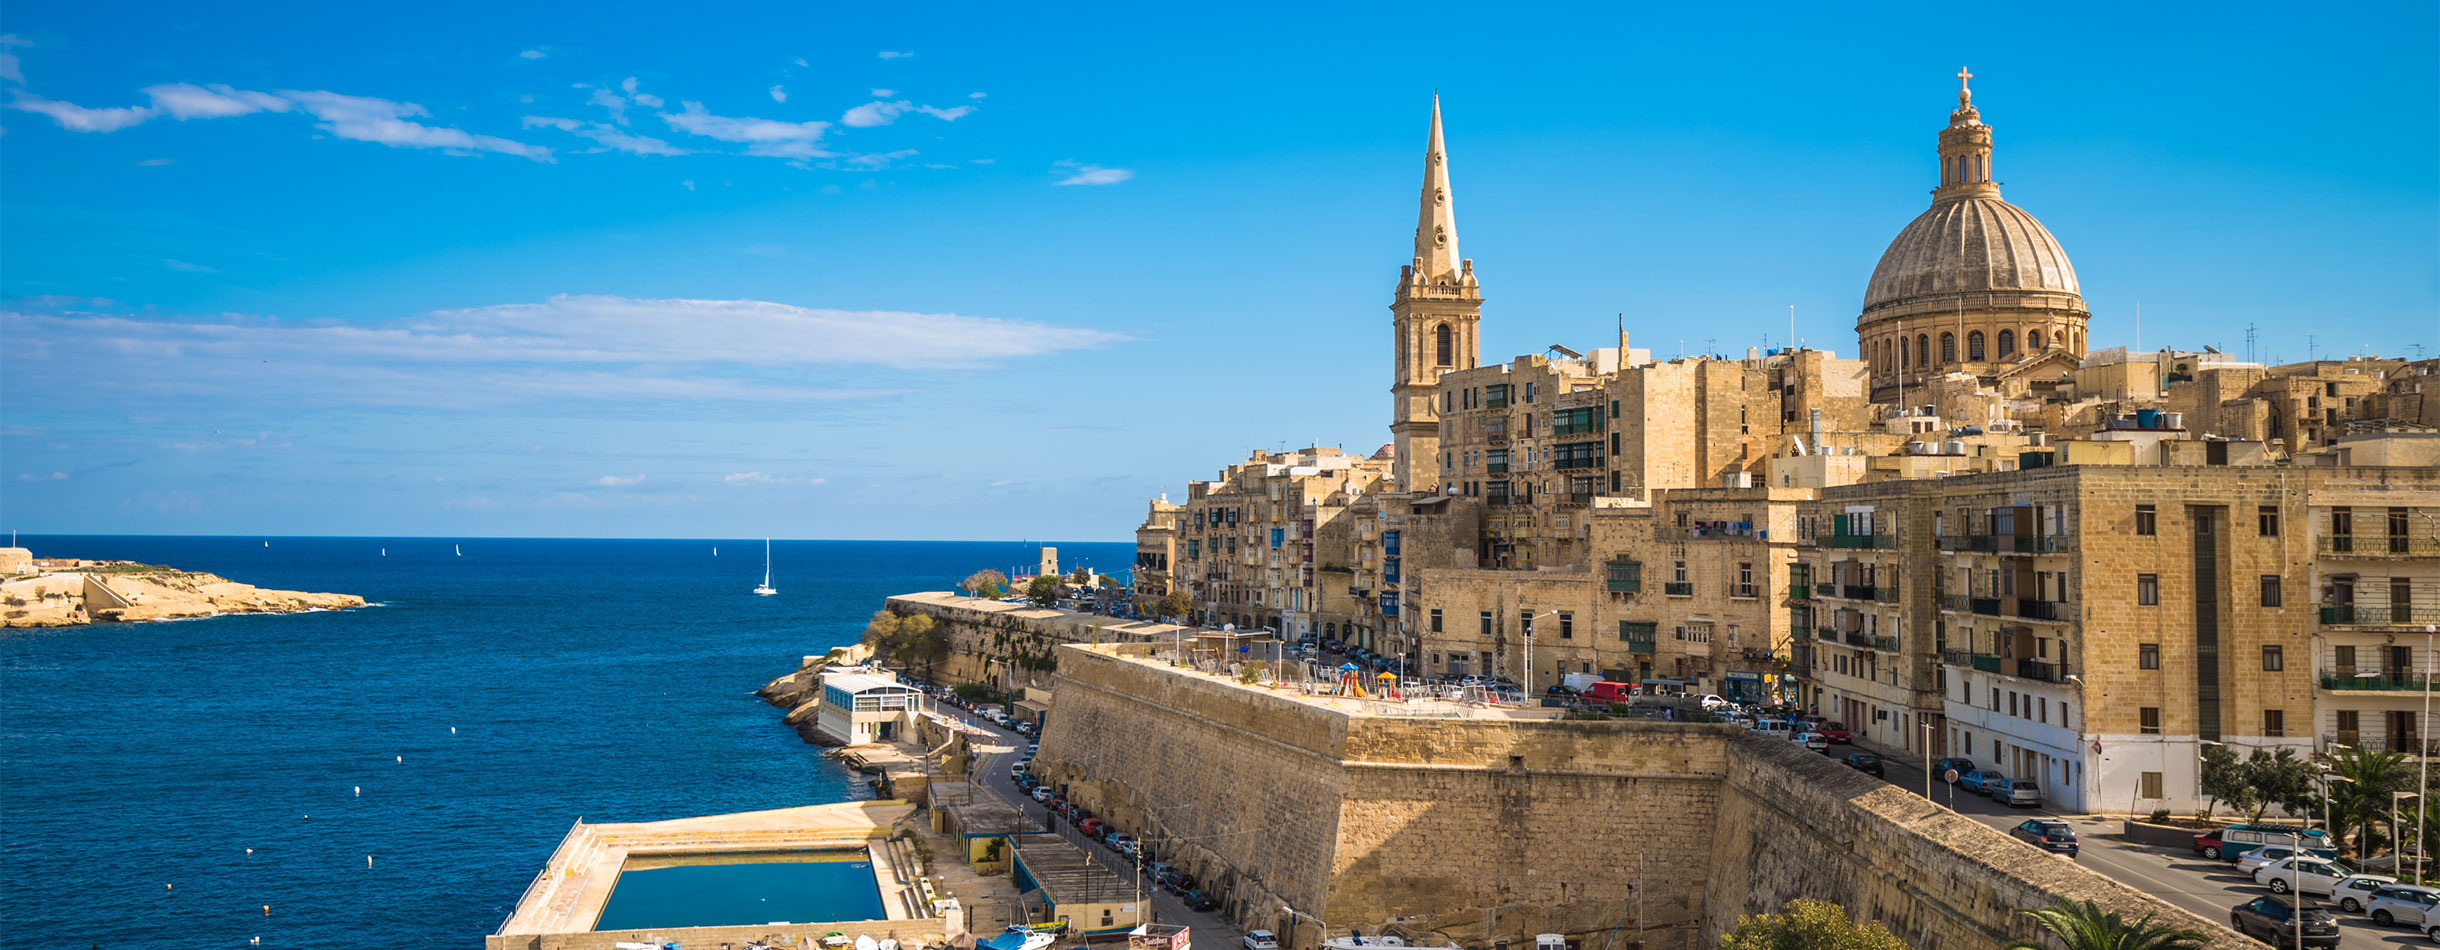 Malta Valletta Cd